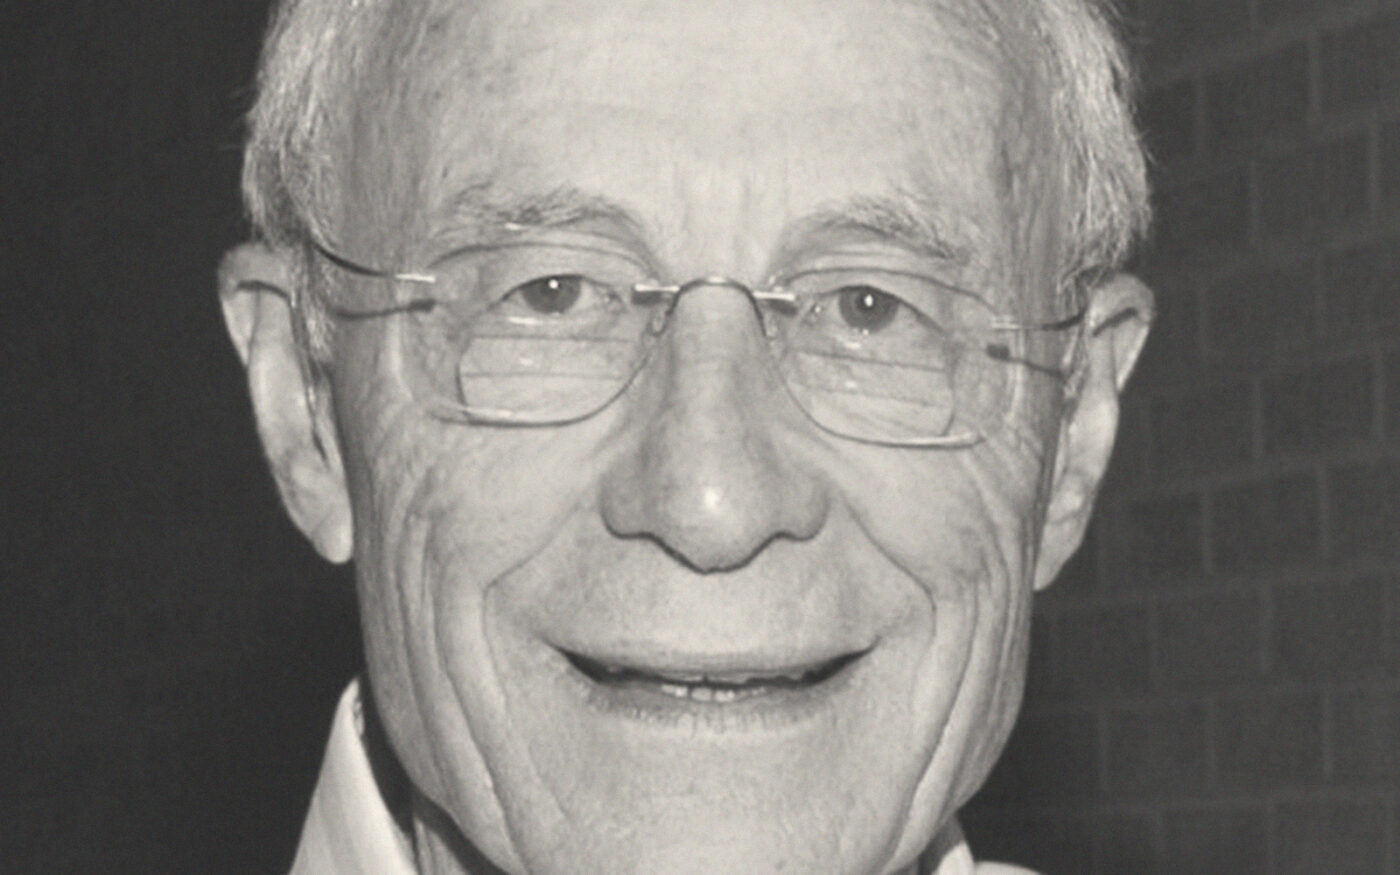 Revered General Contractor Bartlett Cocke Jr. Dead at 93